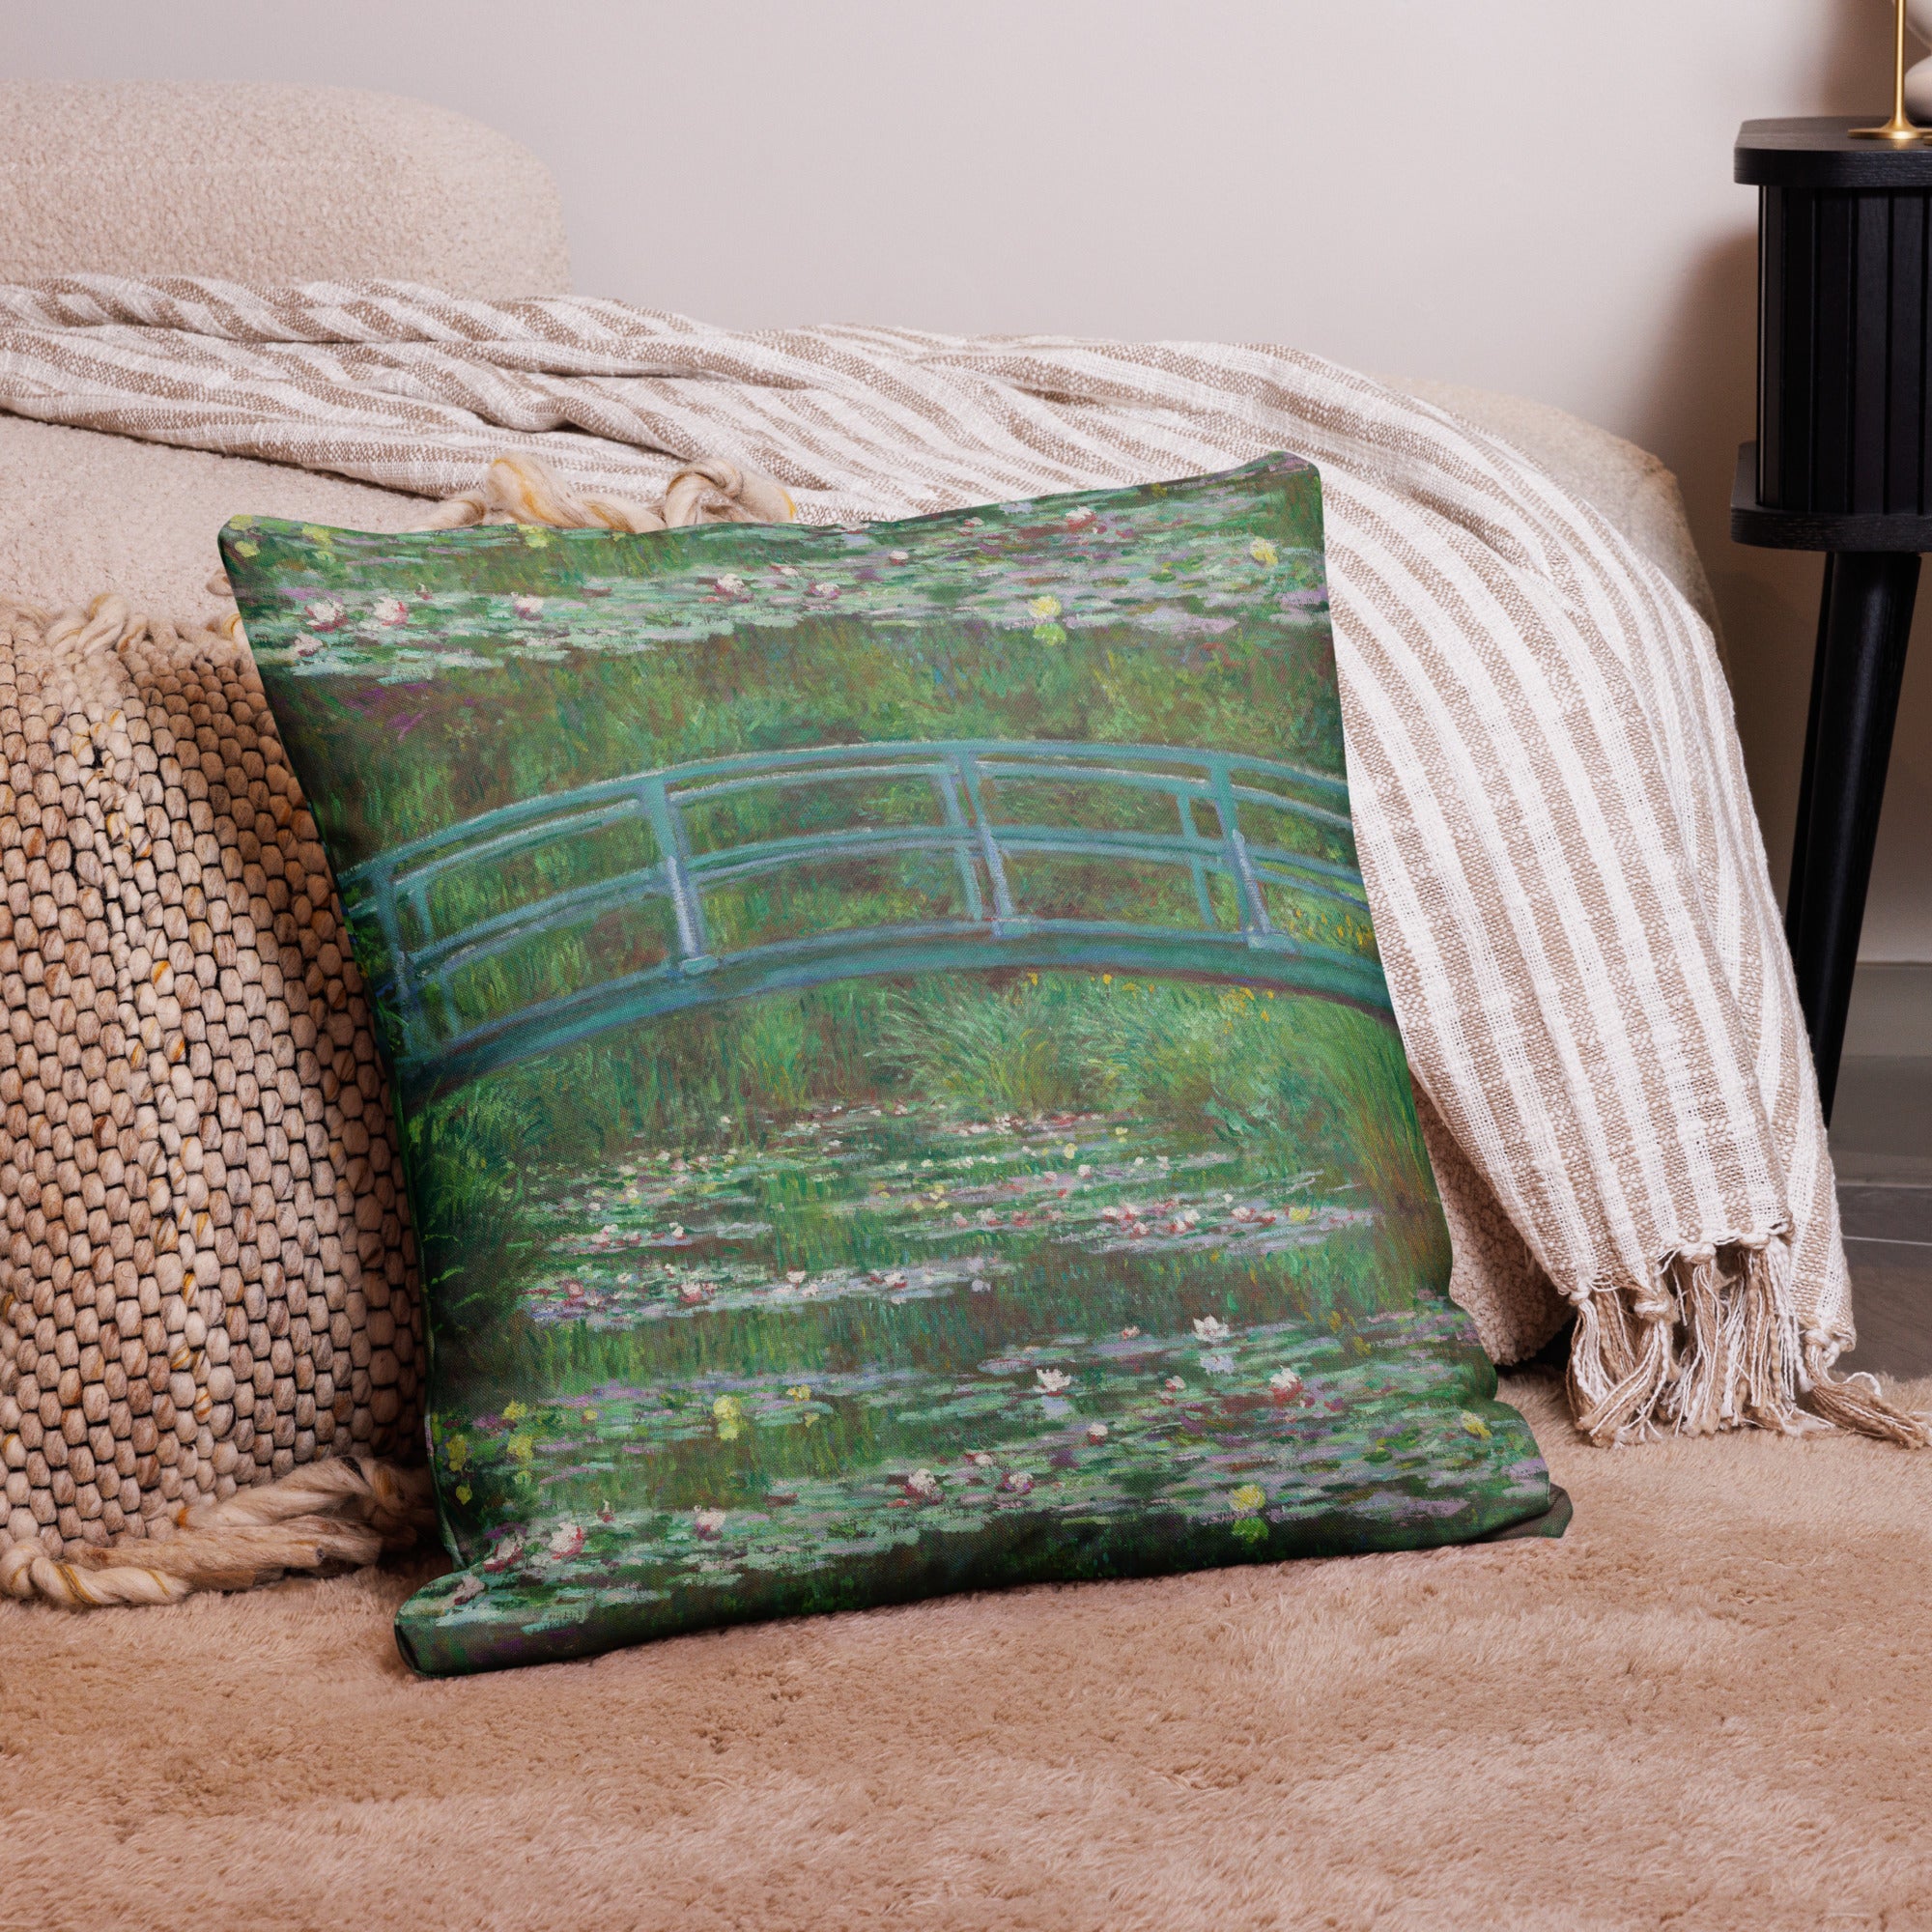 Claude Monet 'The Japanese Footbridge' Famous Painting Premium Pillow | Premium Art Cushion